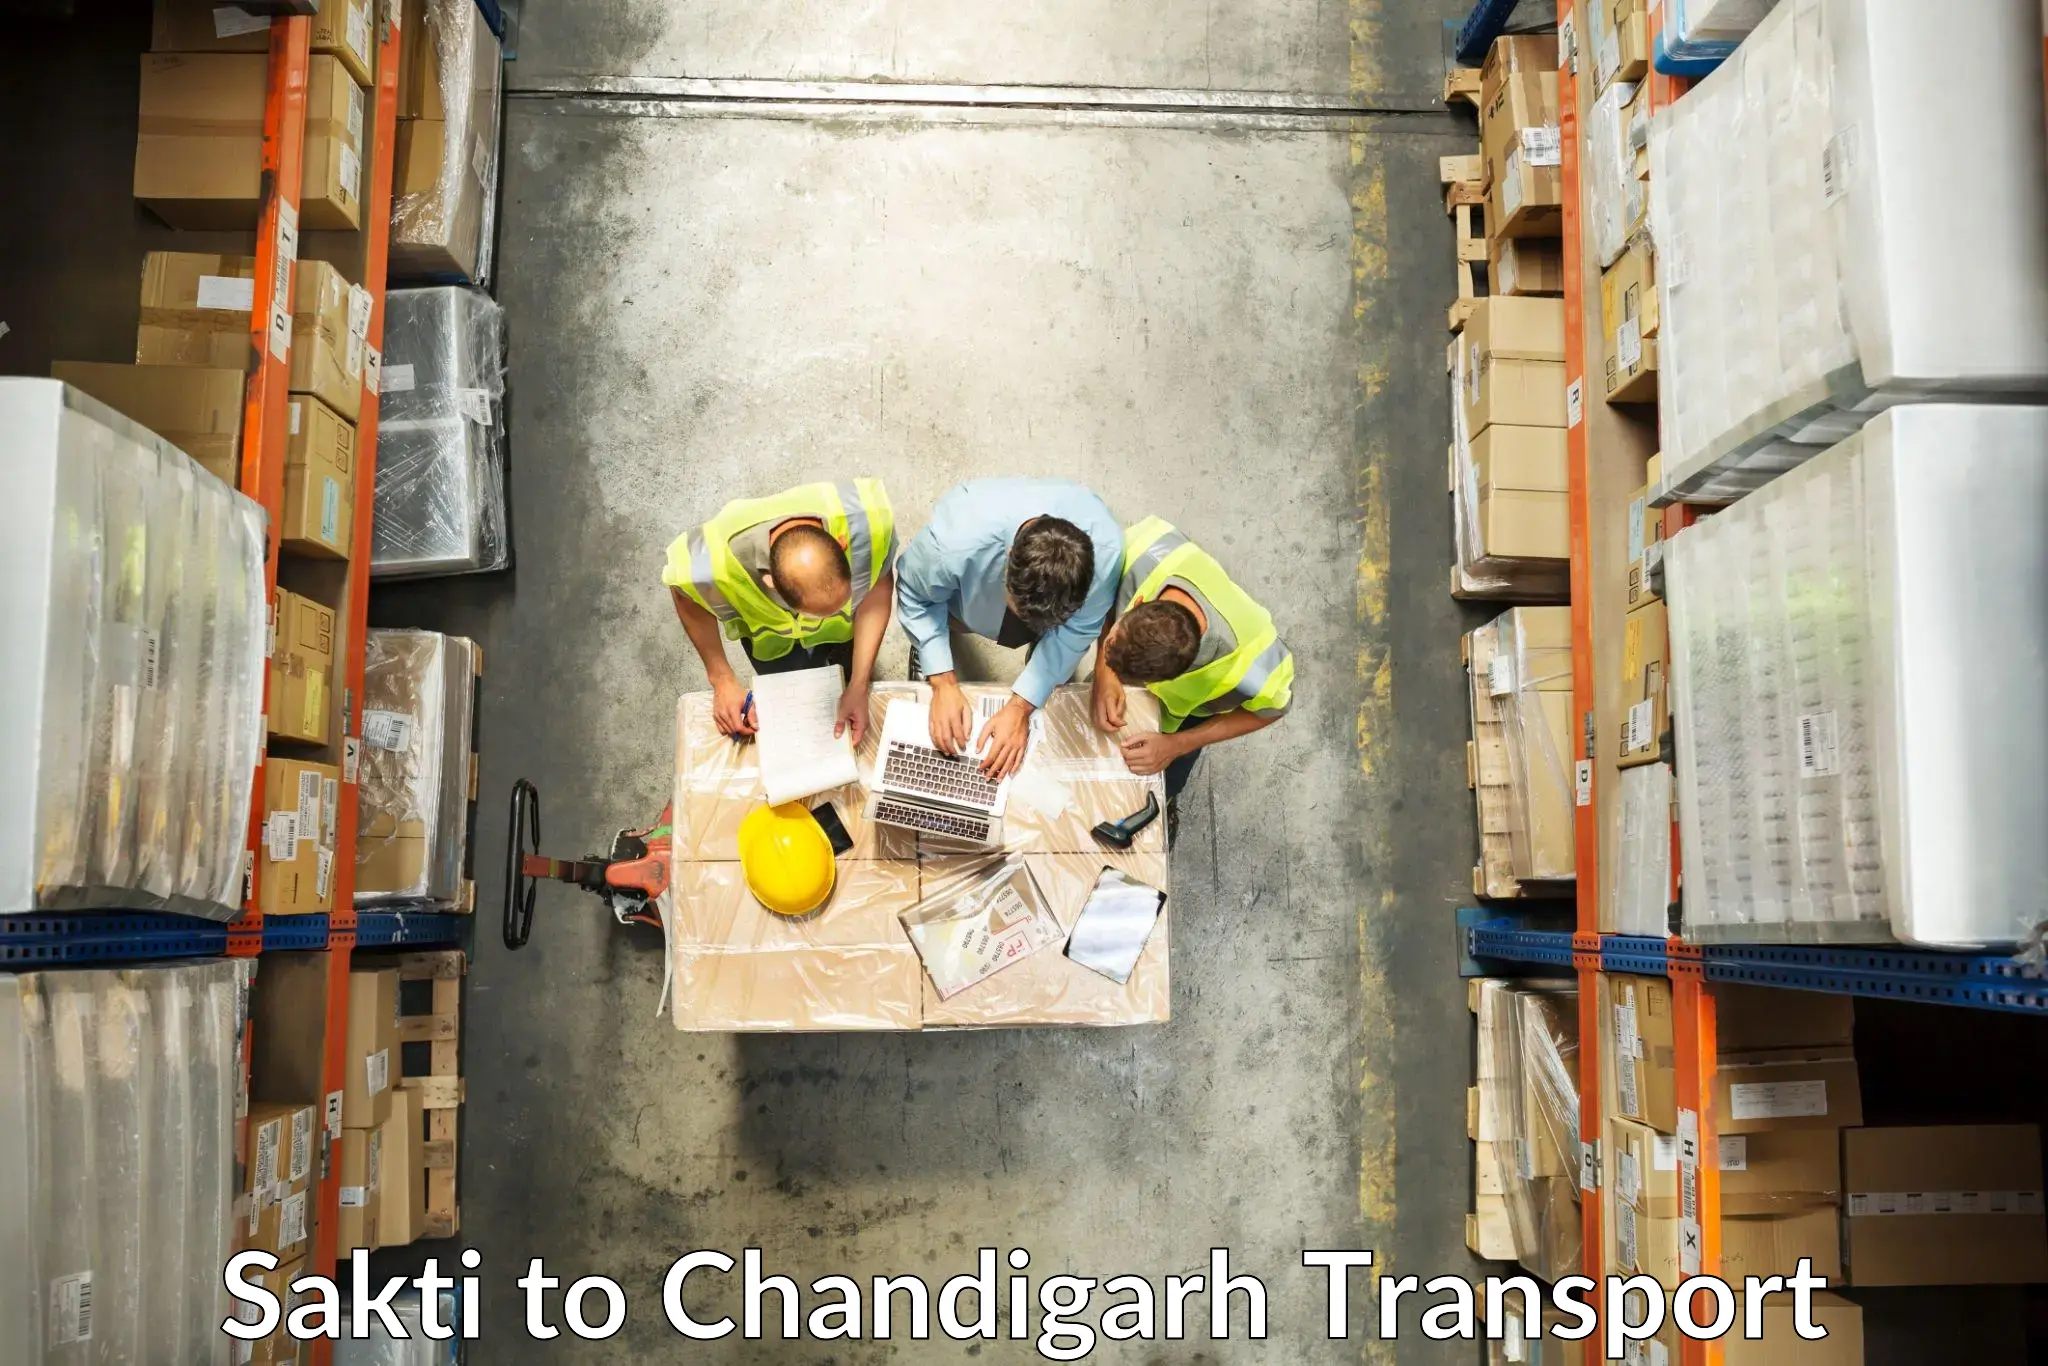 Truck transport companies in India Sakti to Chandigarh